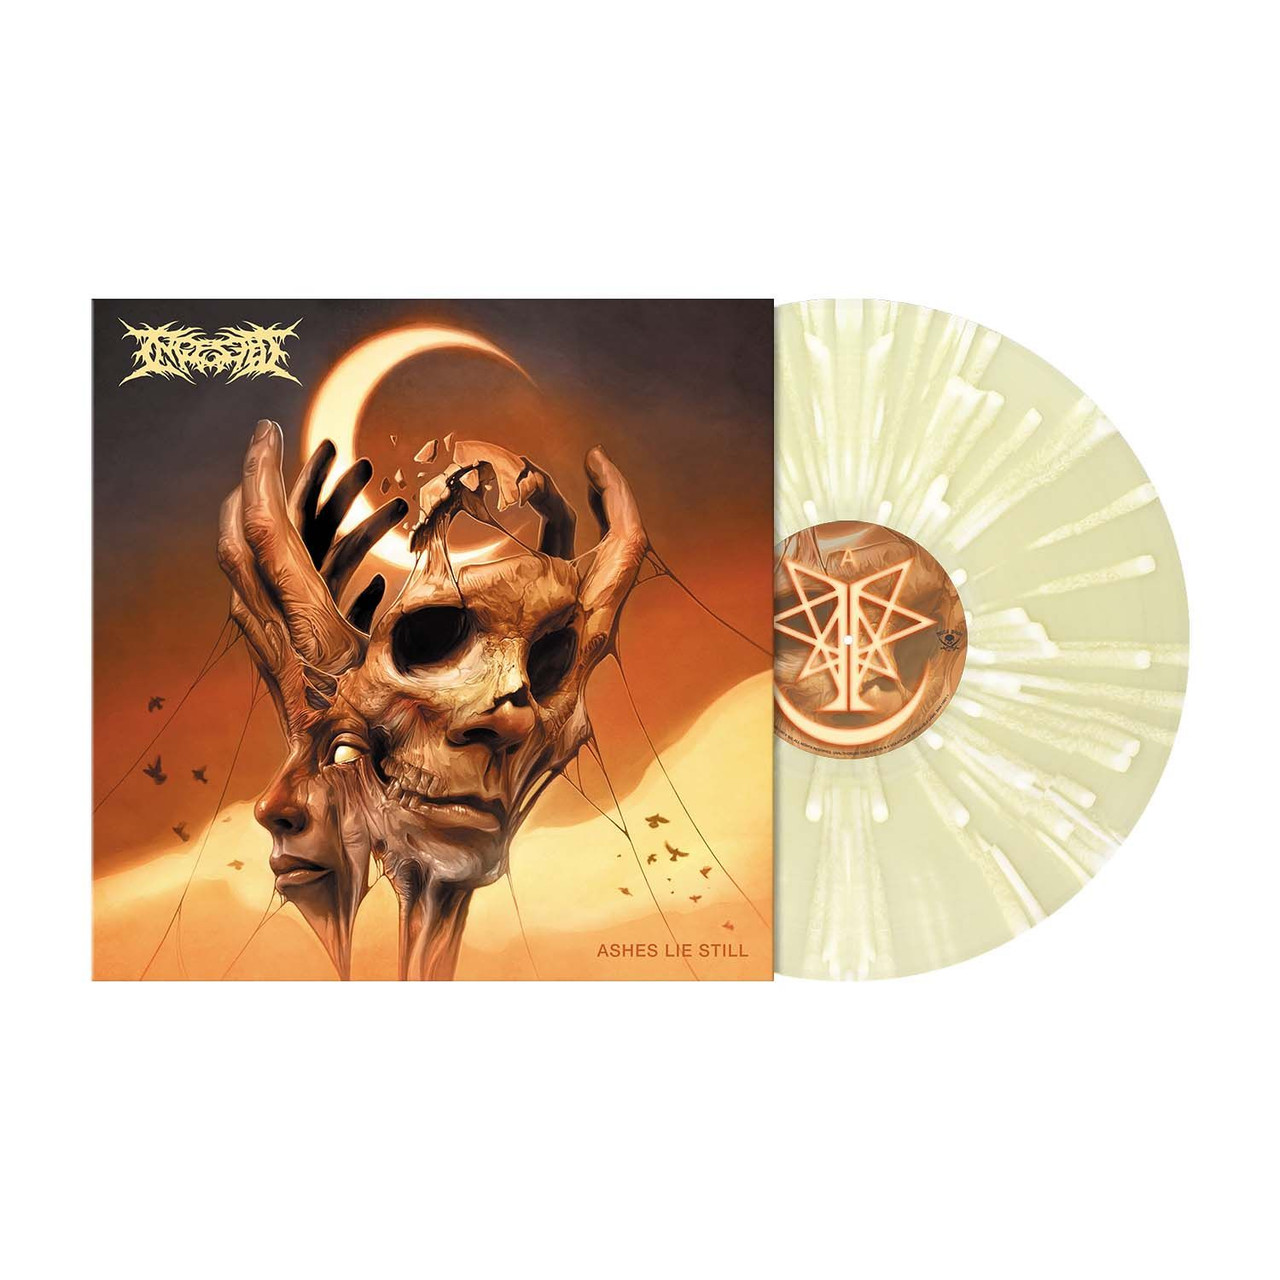 PRE-ORDER - Ingested 'Ashes Lie Still' LP Clear White Splatter Vinyl - RELEASE DATE 4th November 2022